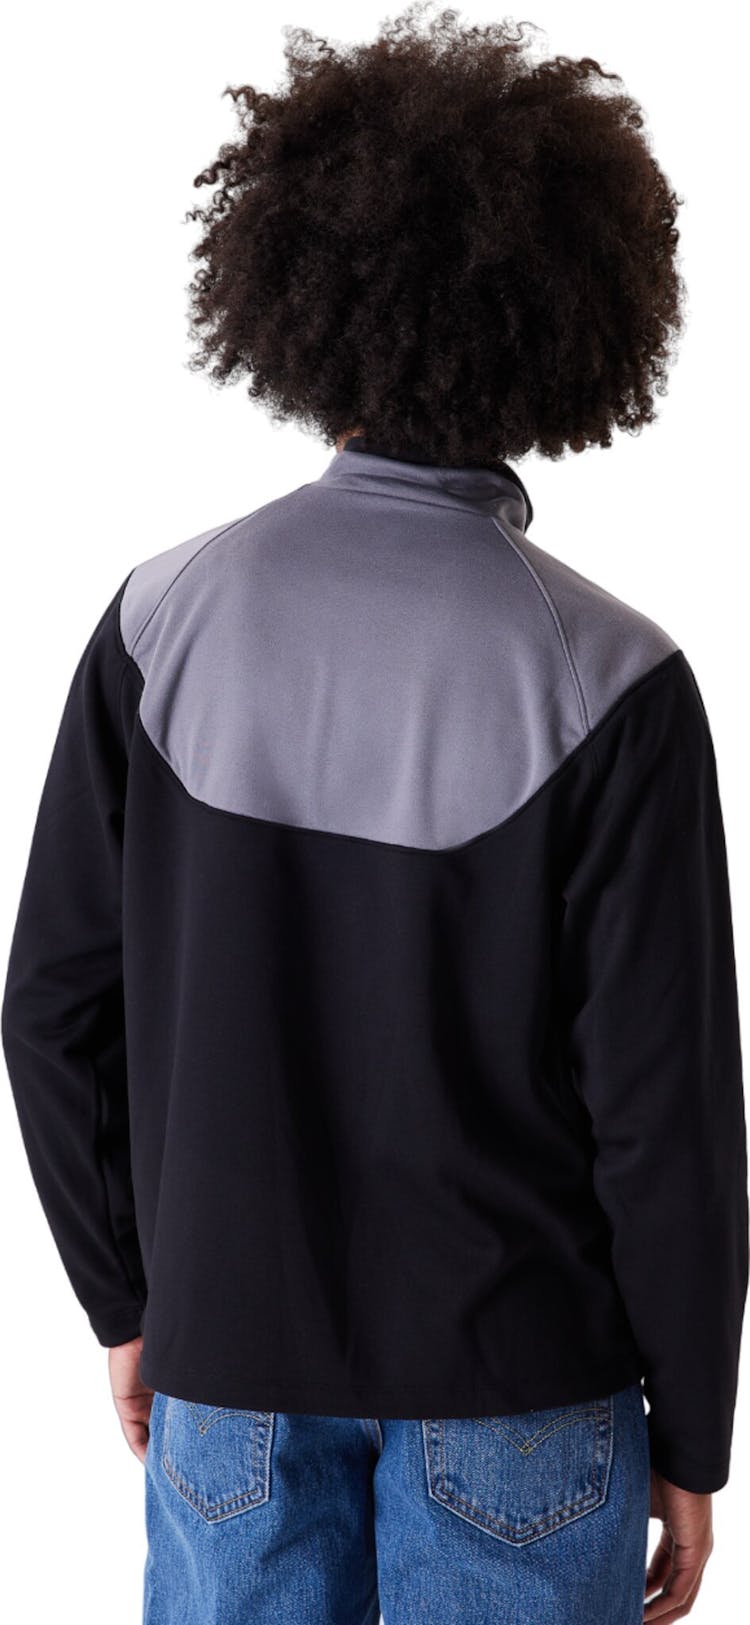 Product gallery image number 4 for product Rove Half Zip Tech Fleece Pullover- Men's